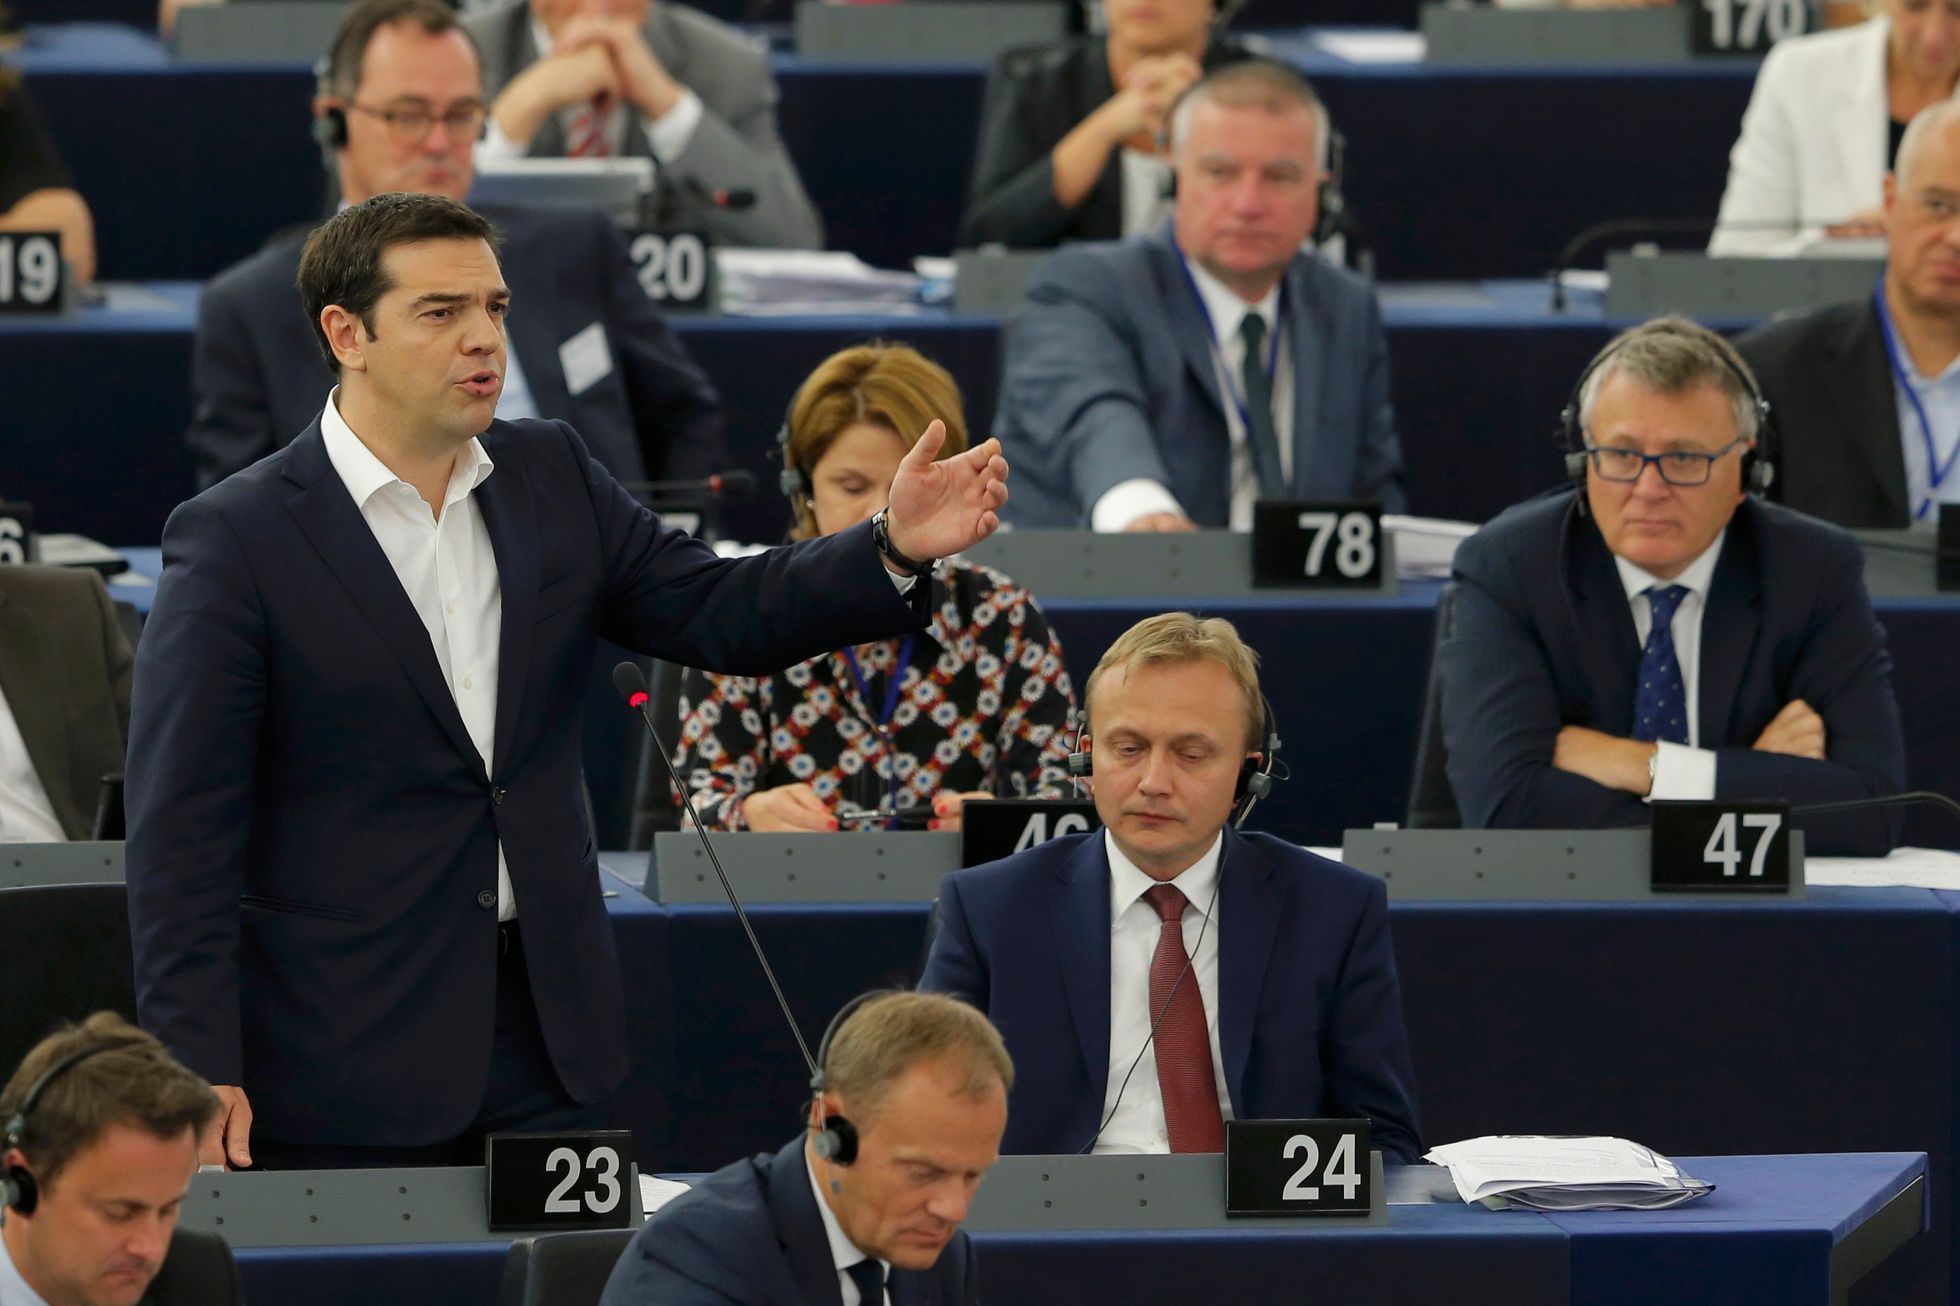 Řecký premiér Alexis Tsipras v Evropském parlamentu ve Štrasburku